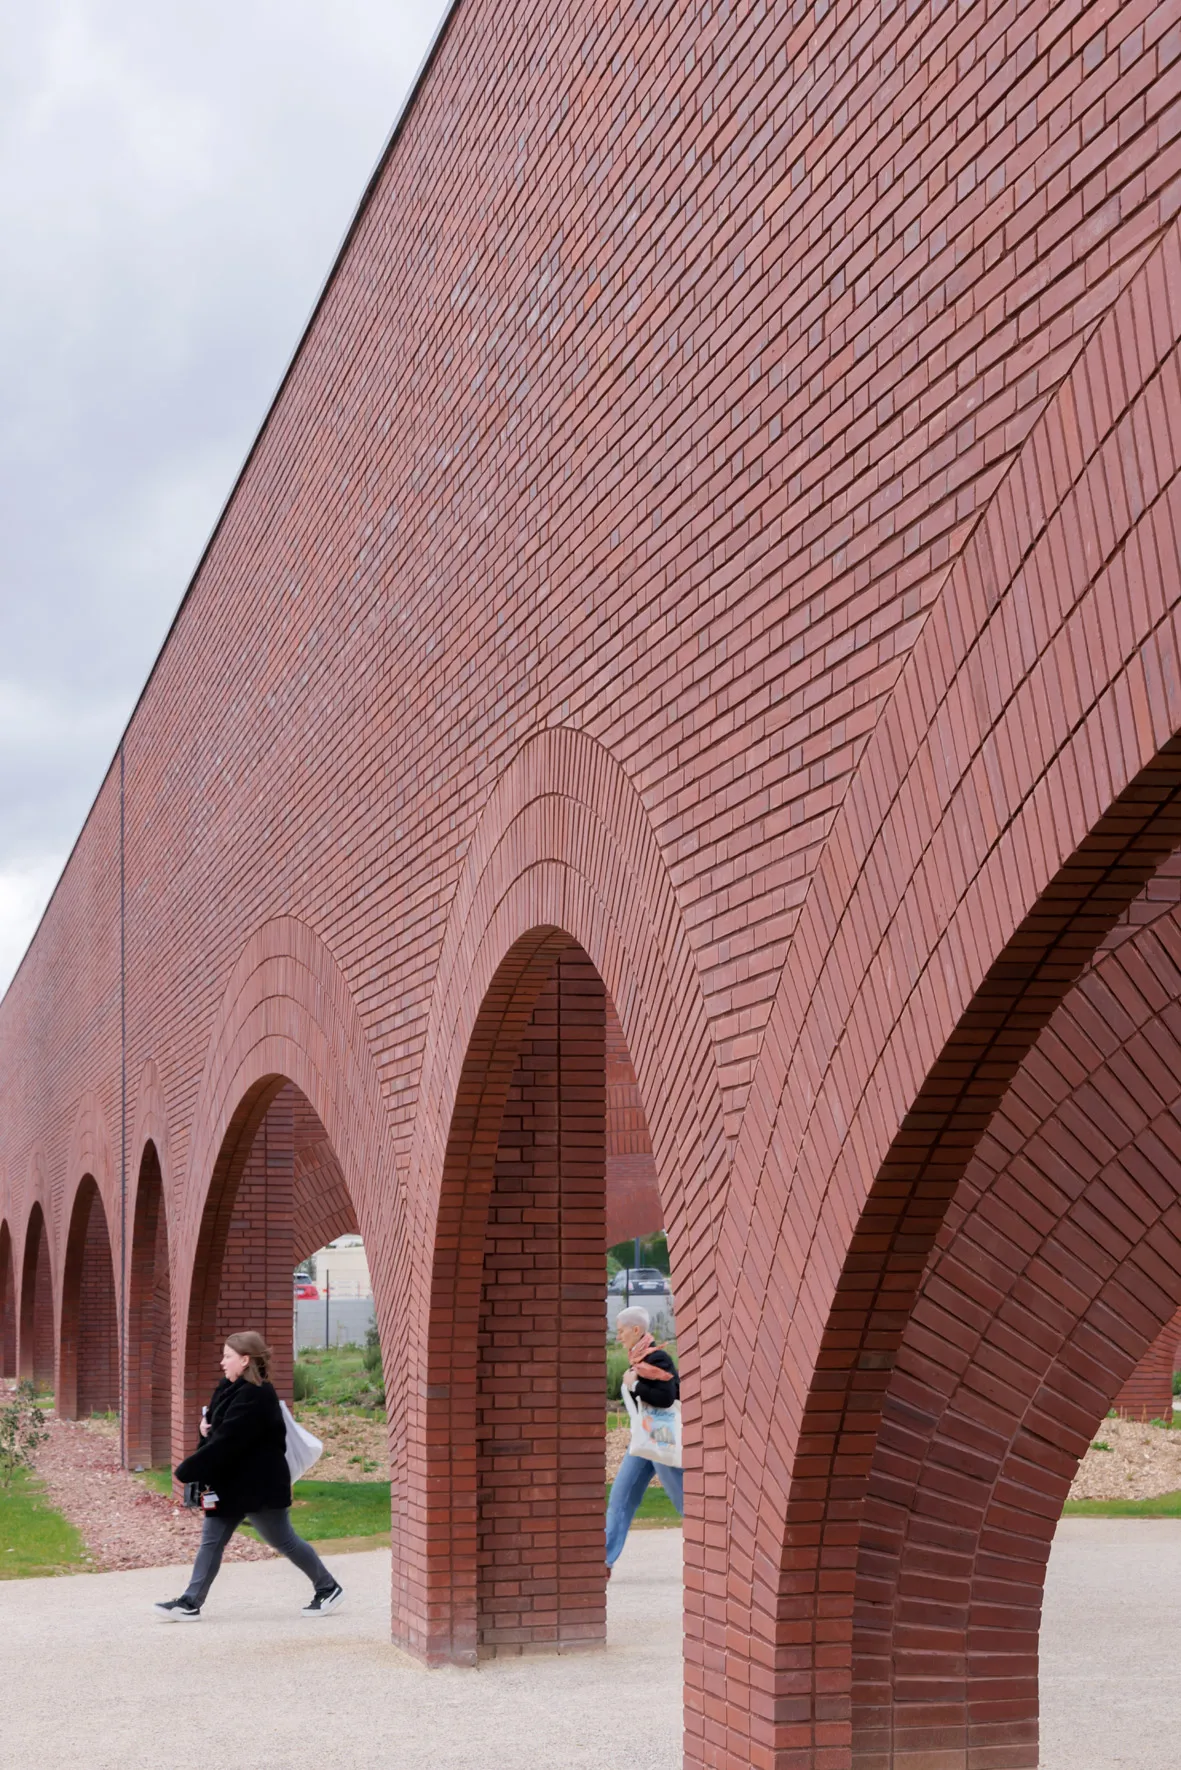 Hermès' workshop brick arches.